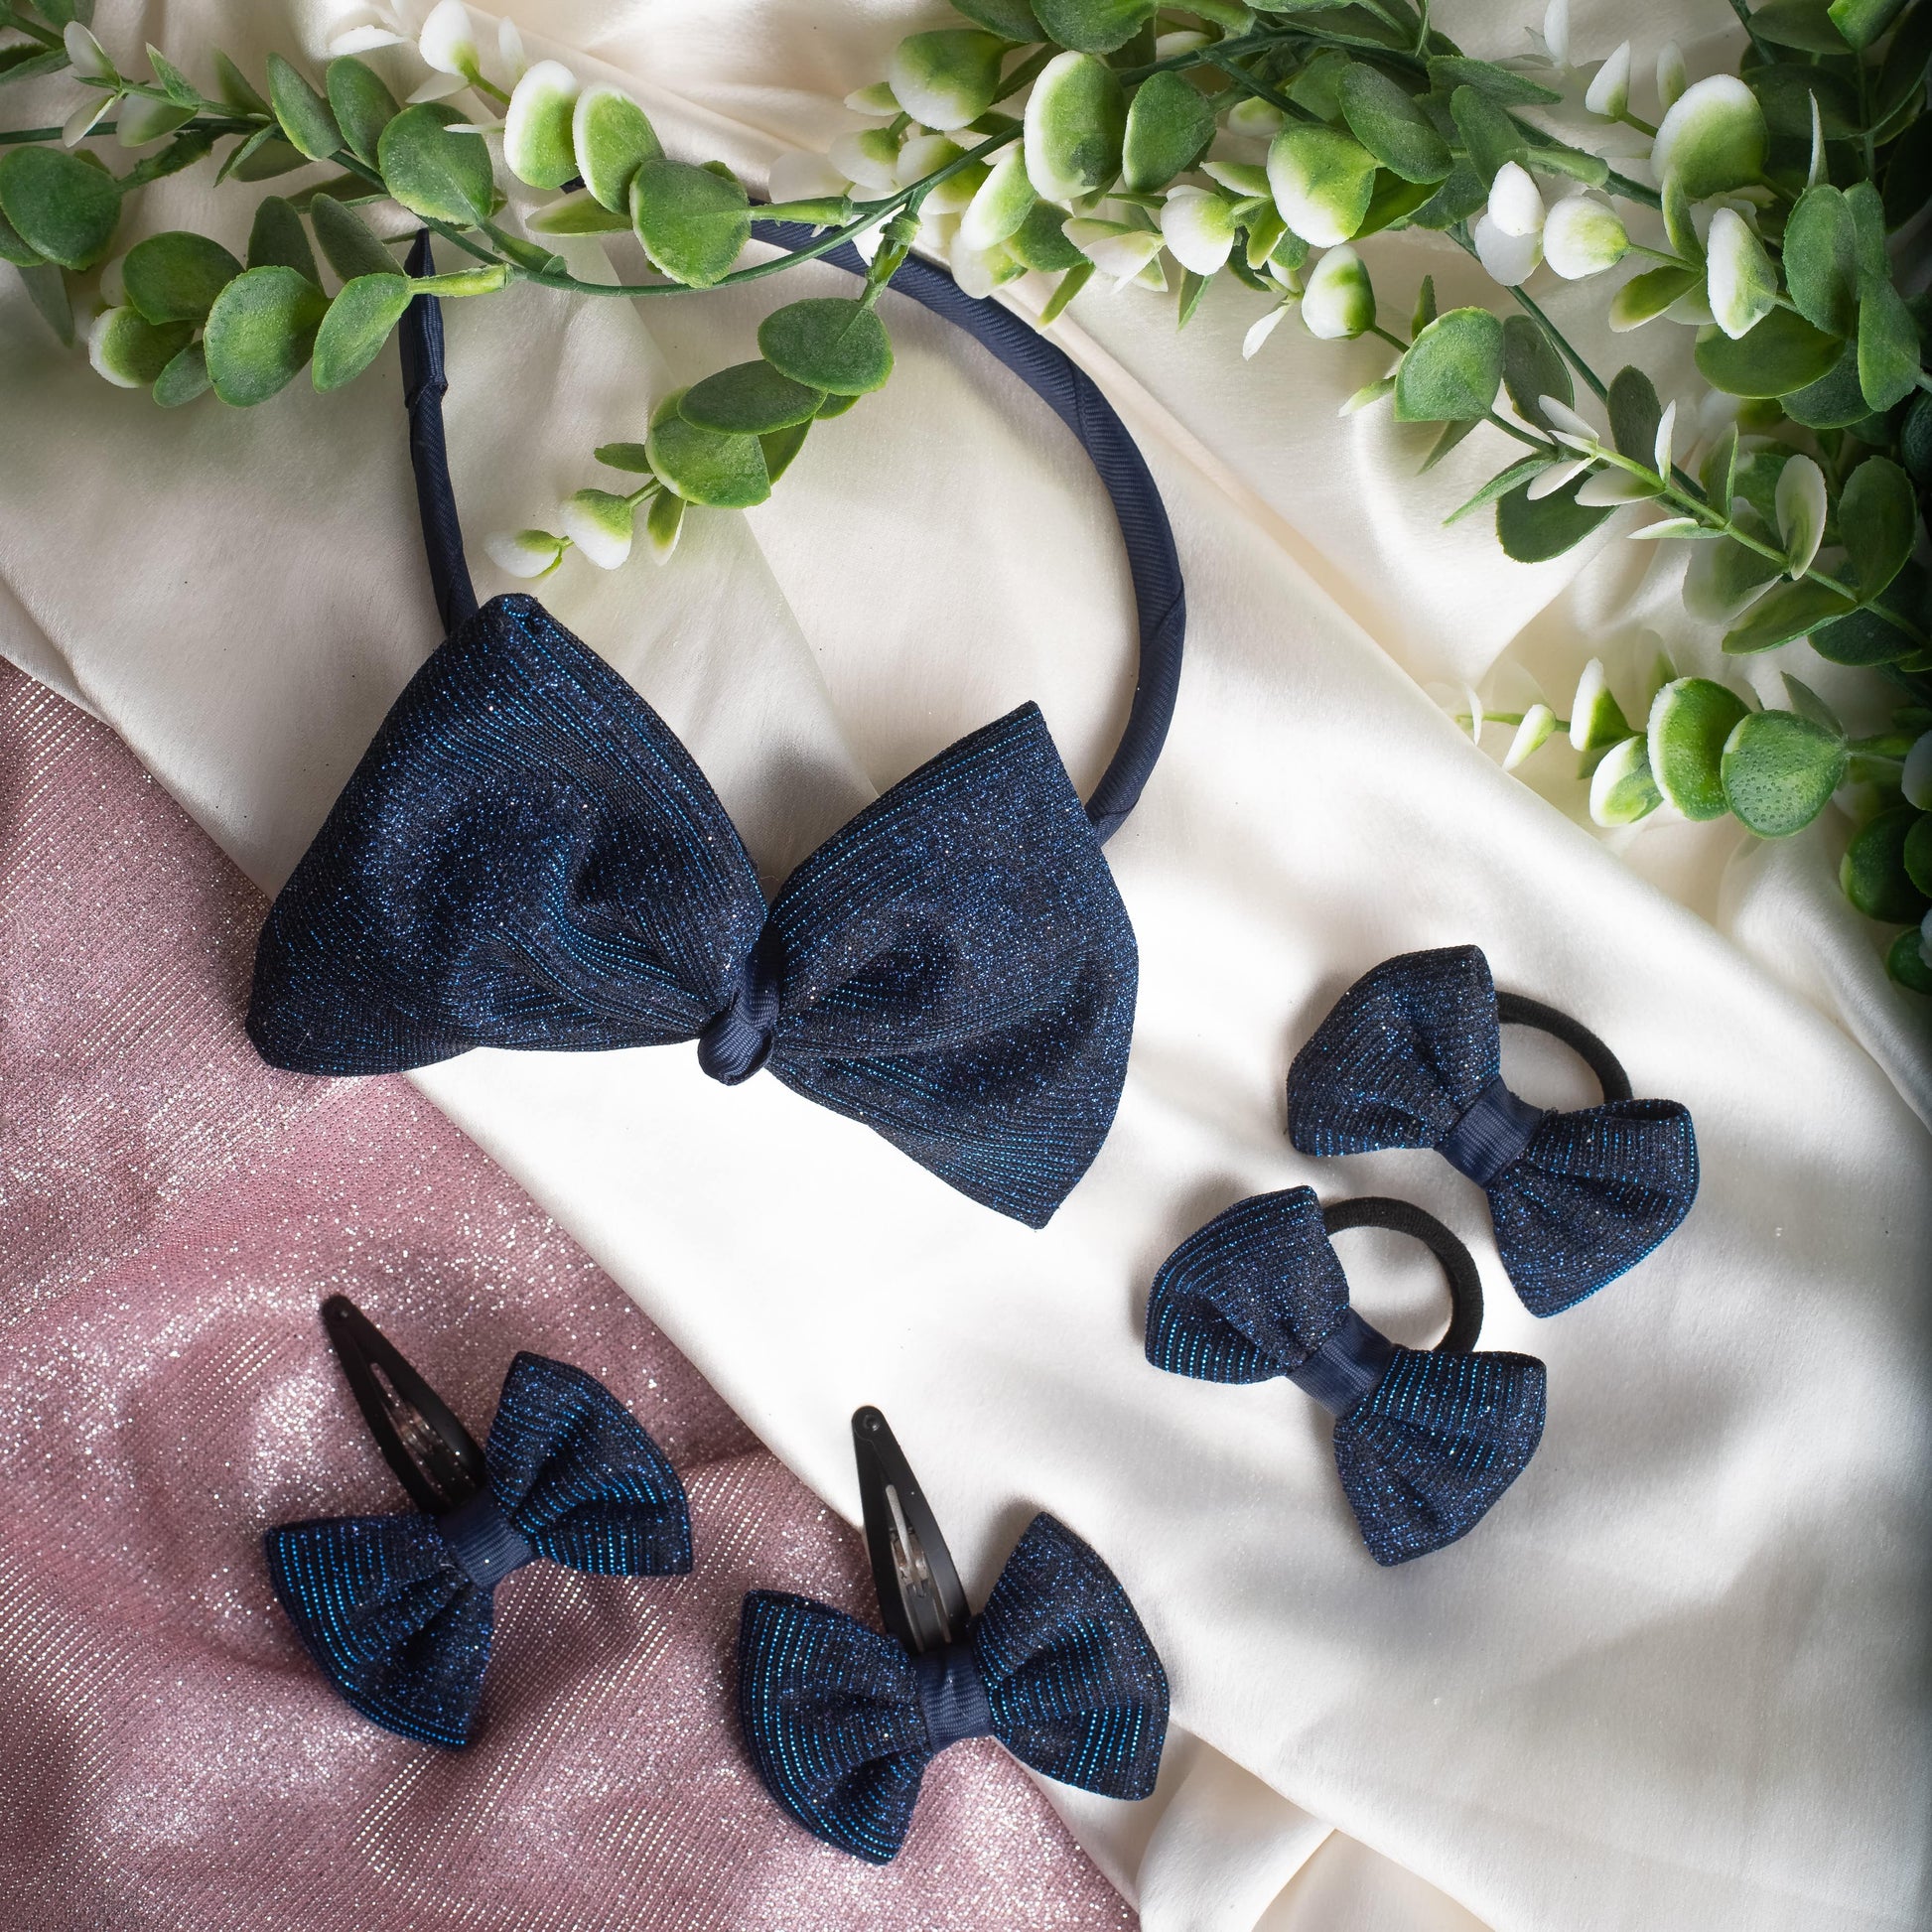 Ribbon Candy- Combo of 1 big bow shiny hairband, 1 pair of shiny bow tic-tac (2 nos), and 1 pair of shiny bow rubberband (2 nos)- Dark blue